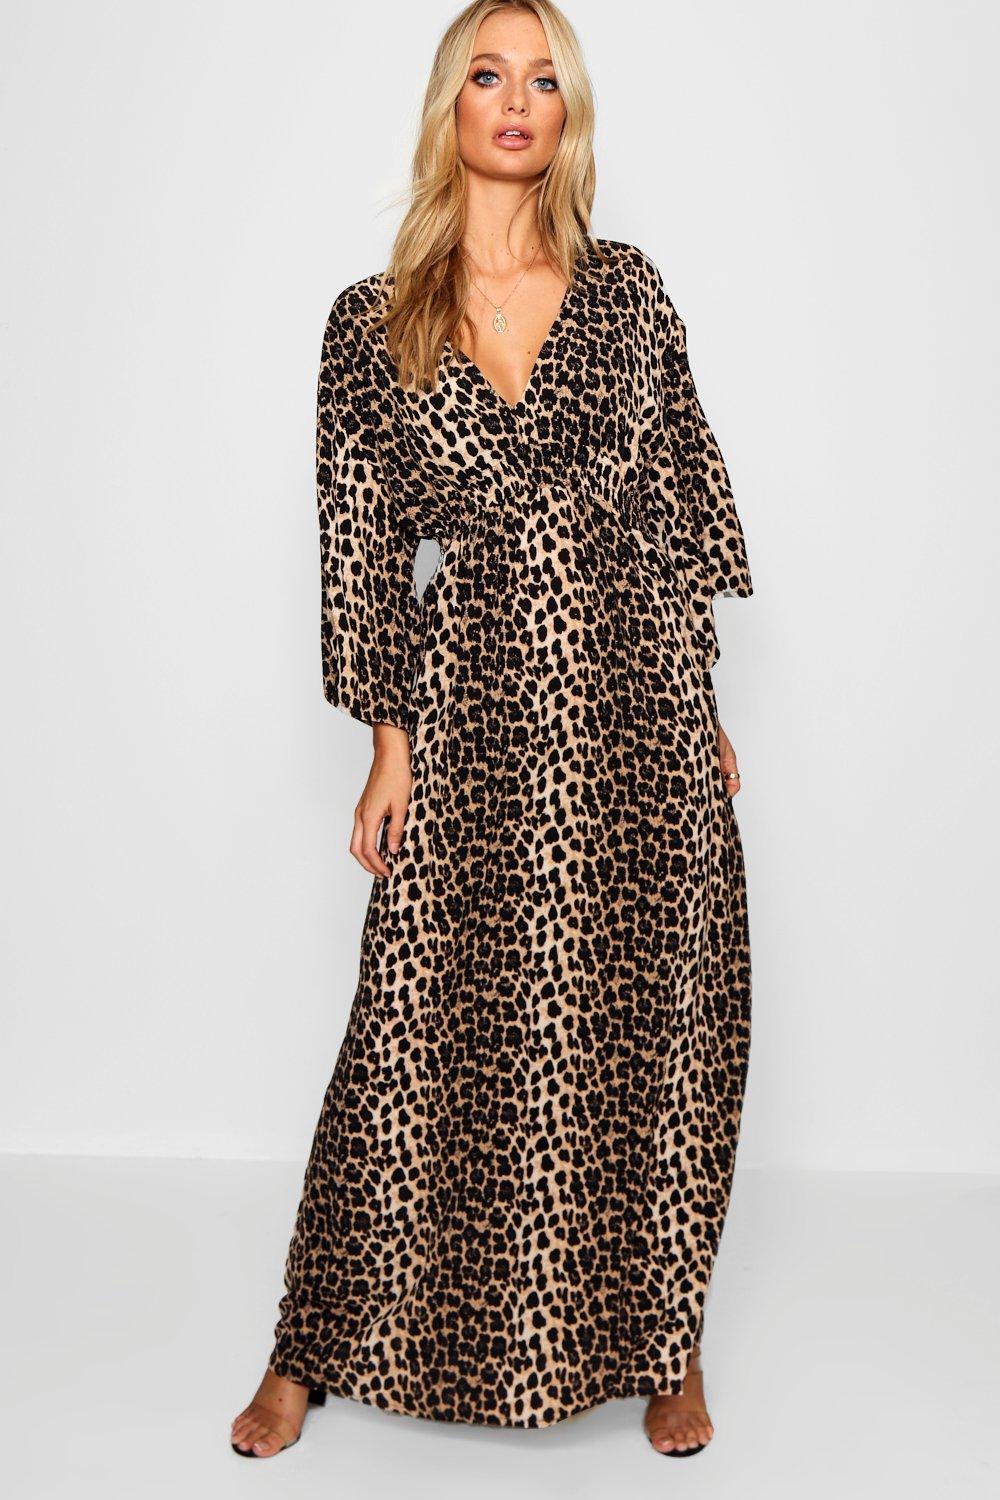 leopard kimono dress